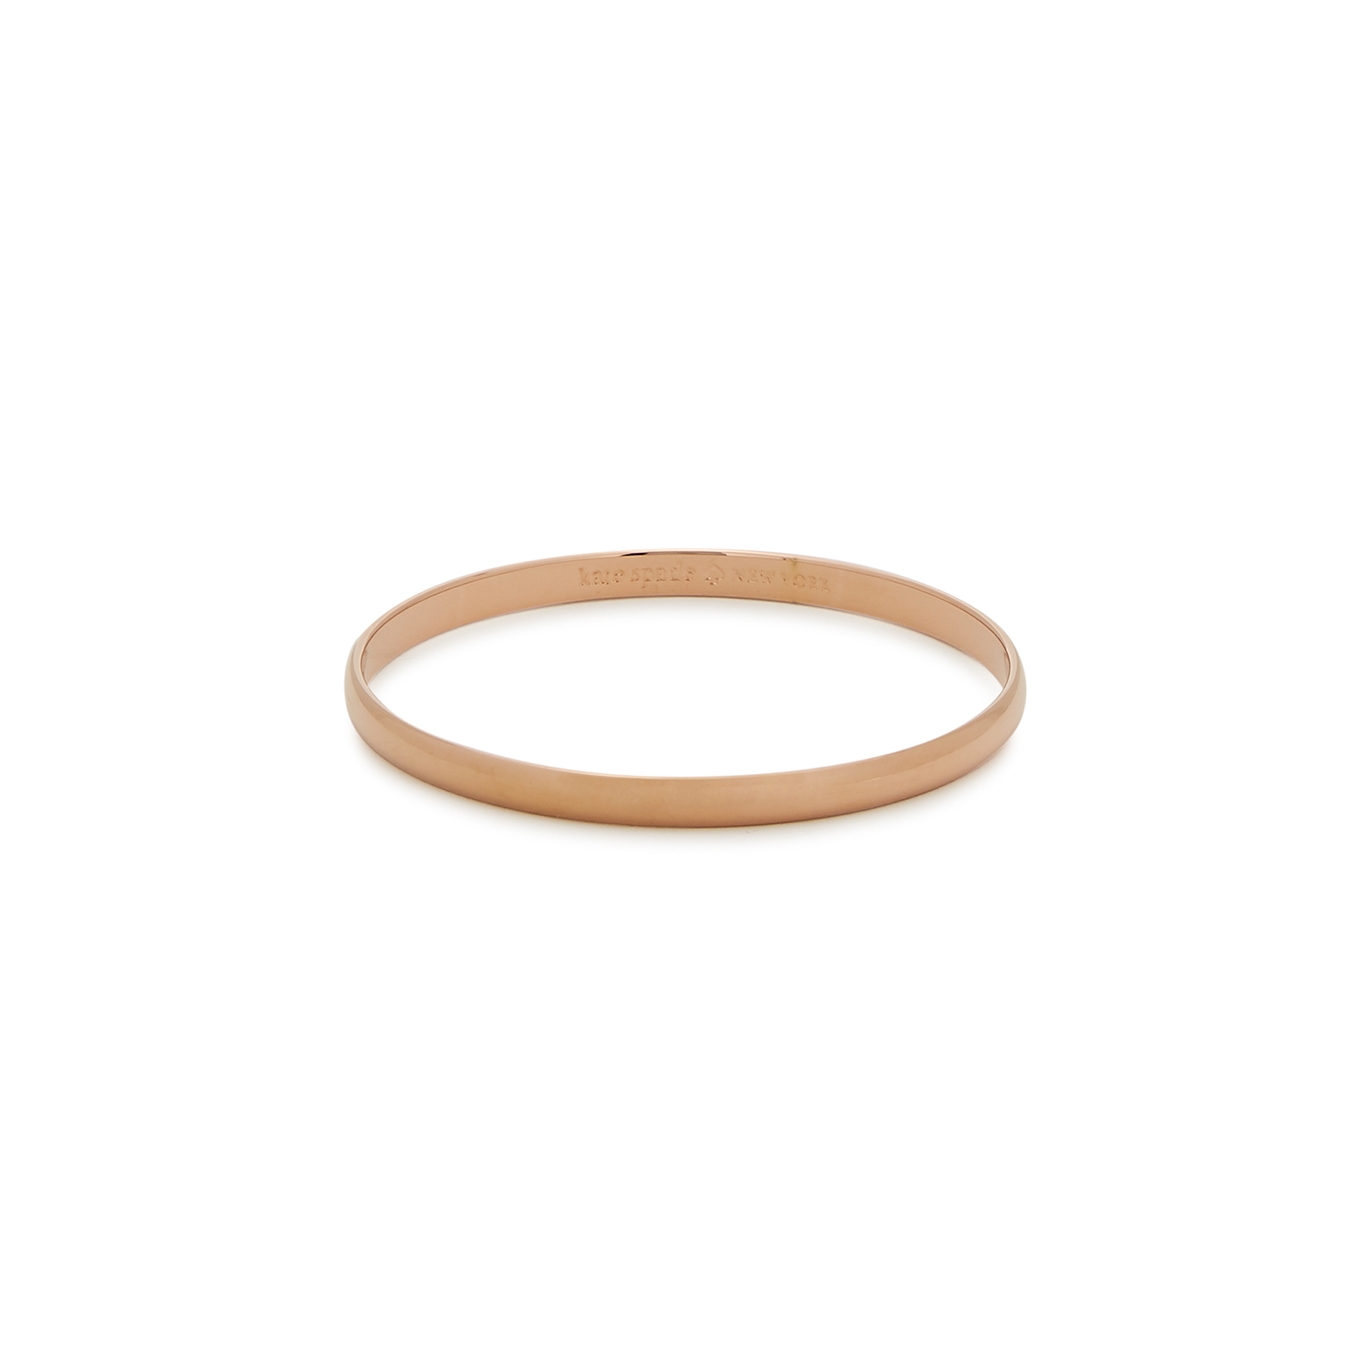 Kate Spade New York Idiom 12kt Rose Gold-plated Bracelet - One Size